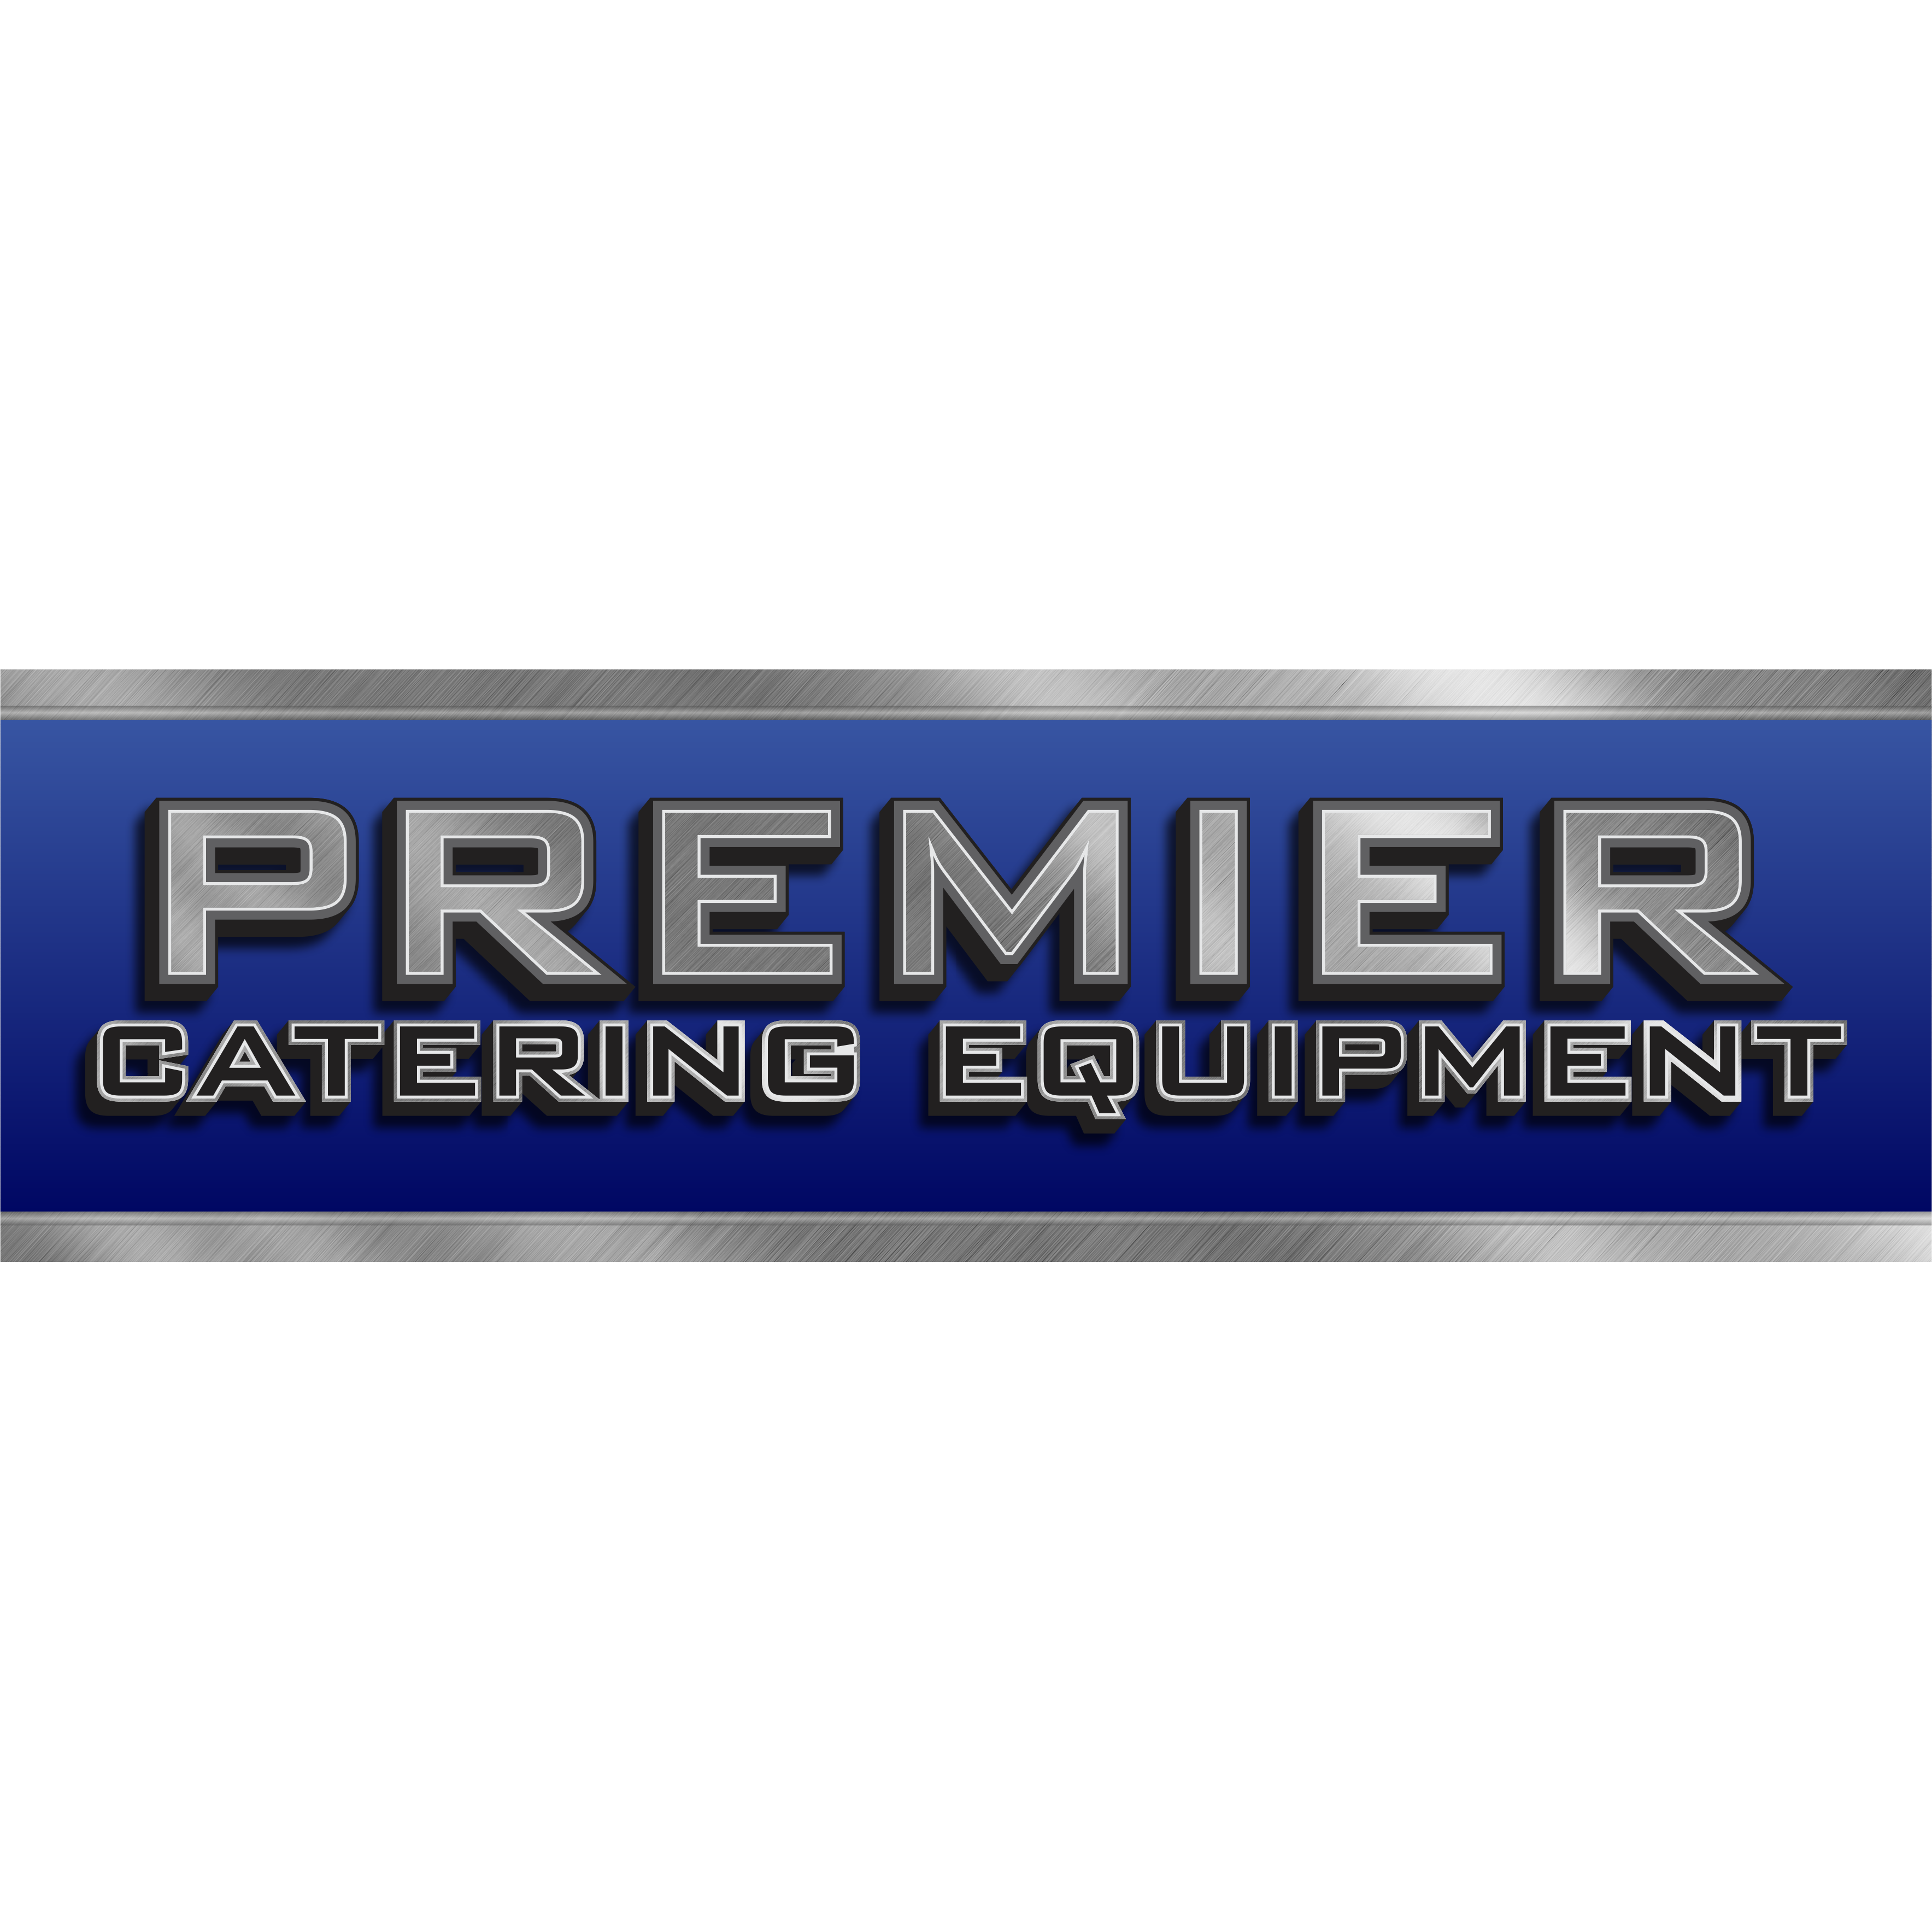 Premier Catering Equipment - Manunda, QLD 4870 - (07) 4053 3444 | ShowMeLocal.com